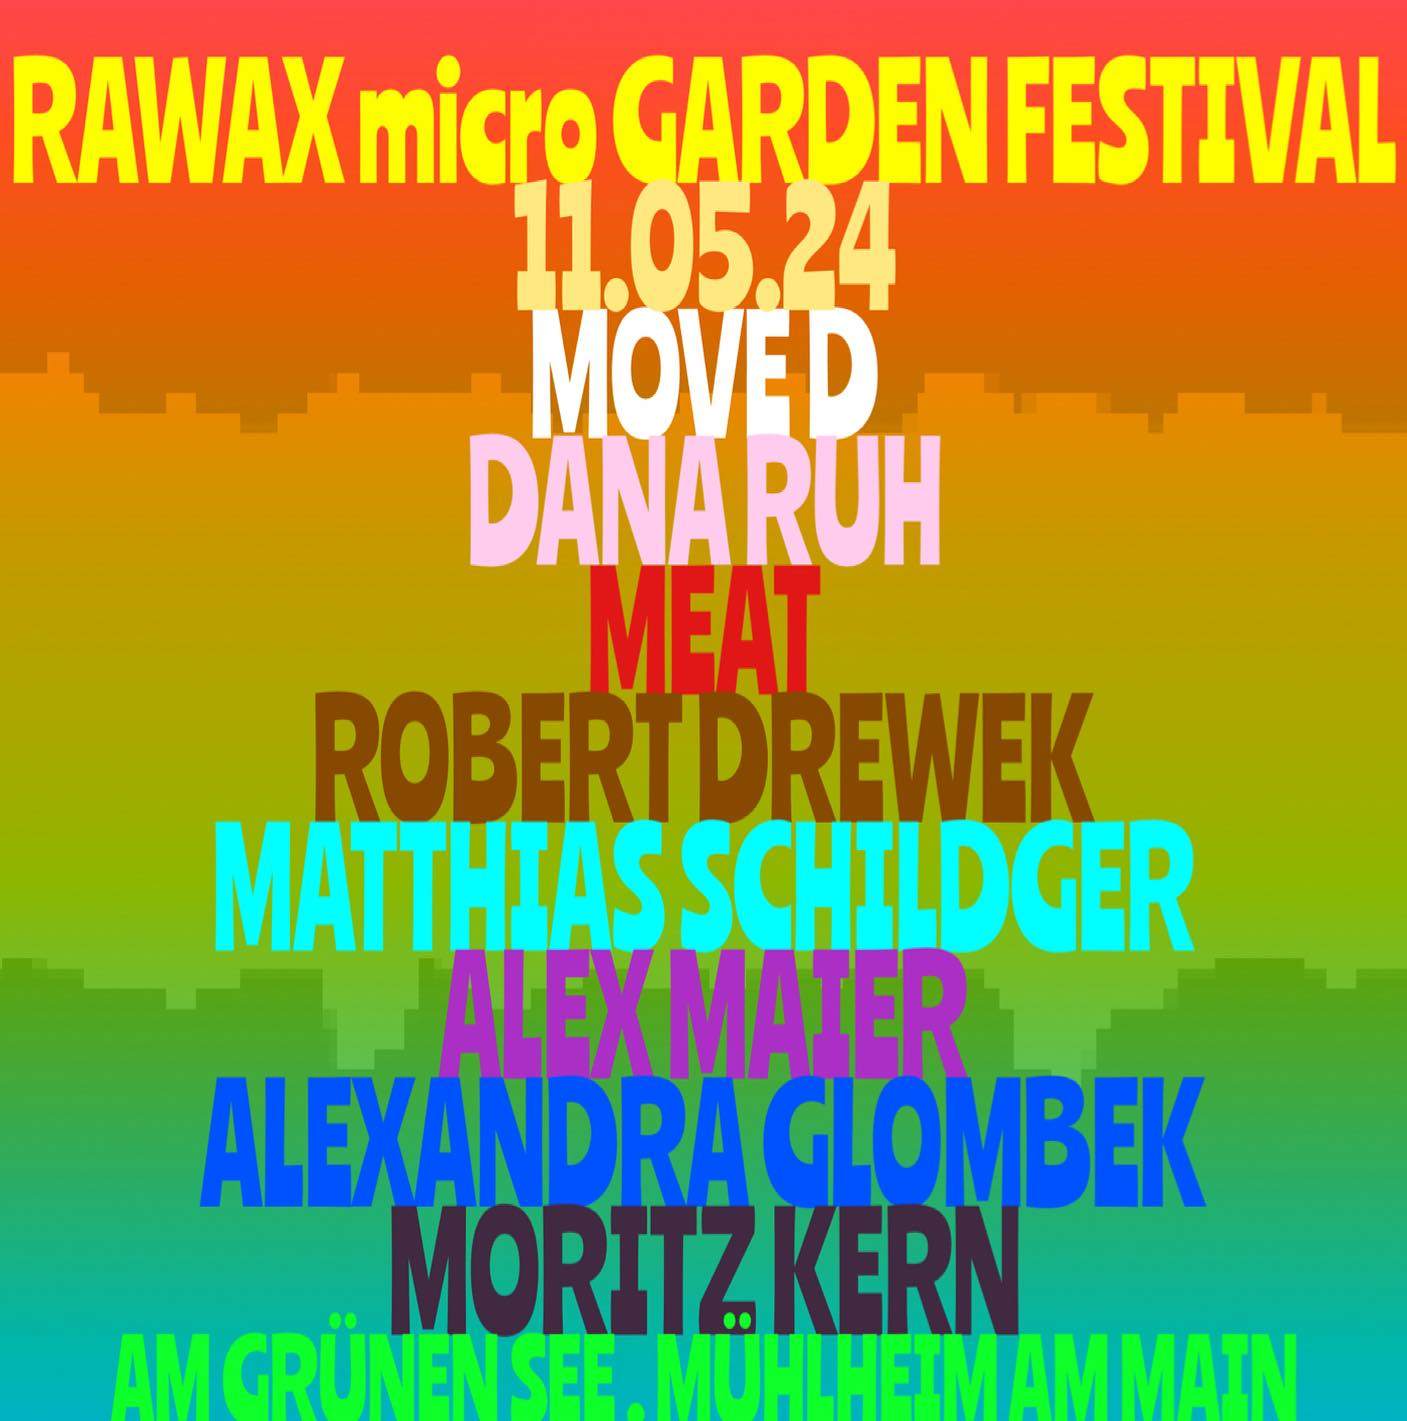 RAWAX micro GARDEN FESTIVAL (Grand Opening Edition) - フライヤー表